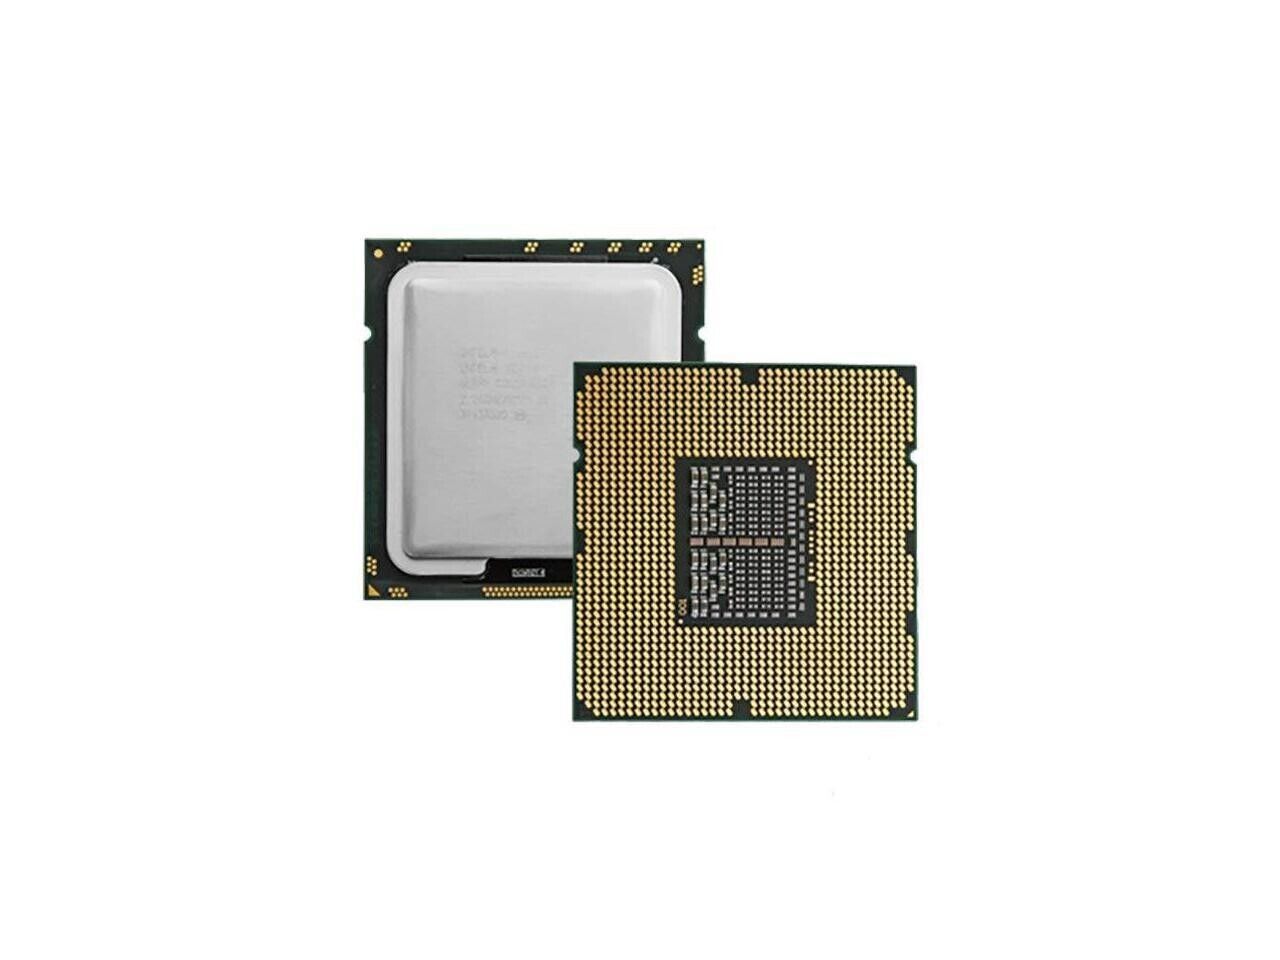 SET OF 6 Intel Xeon X5450 3 GHz LGA 771 Quad Core Server CPU Processor SLBBE